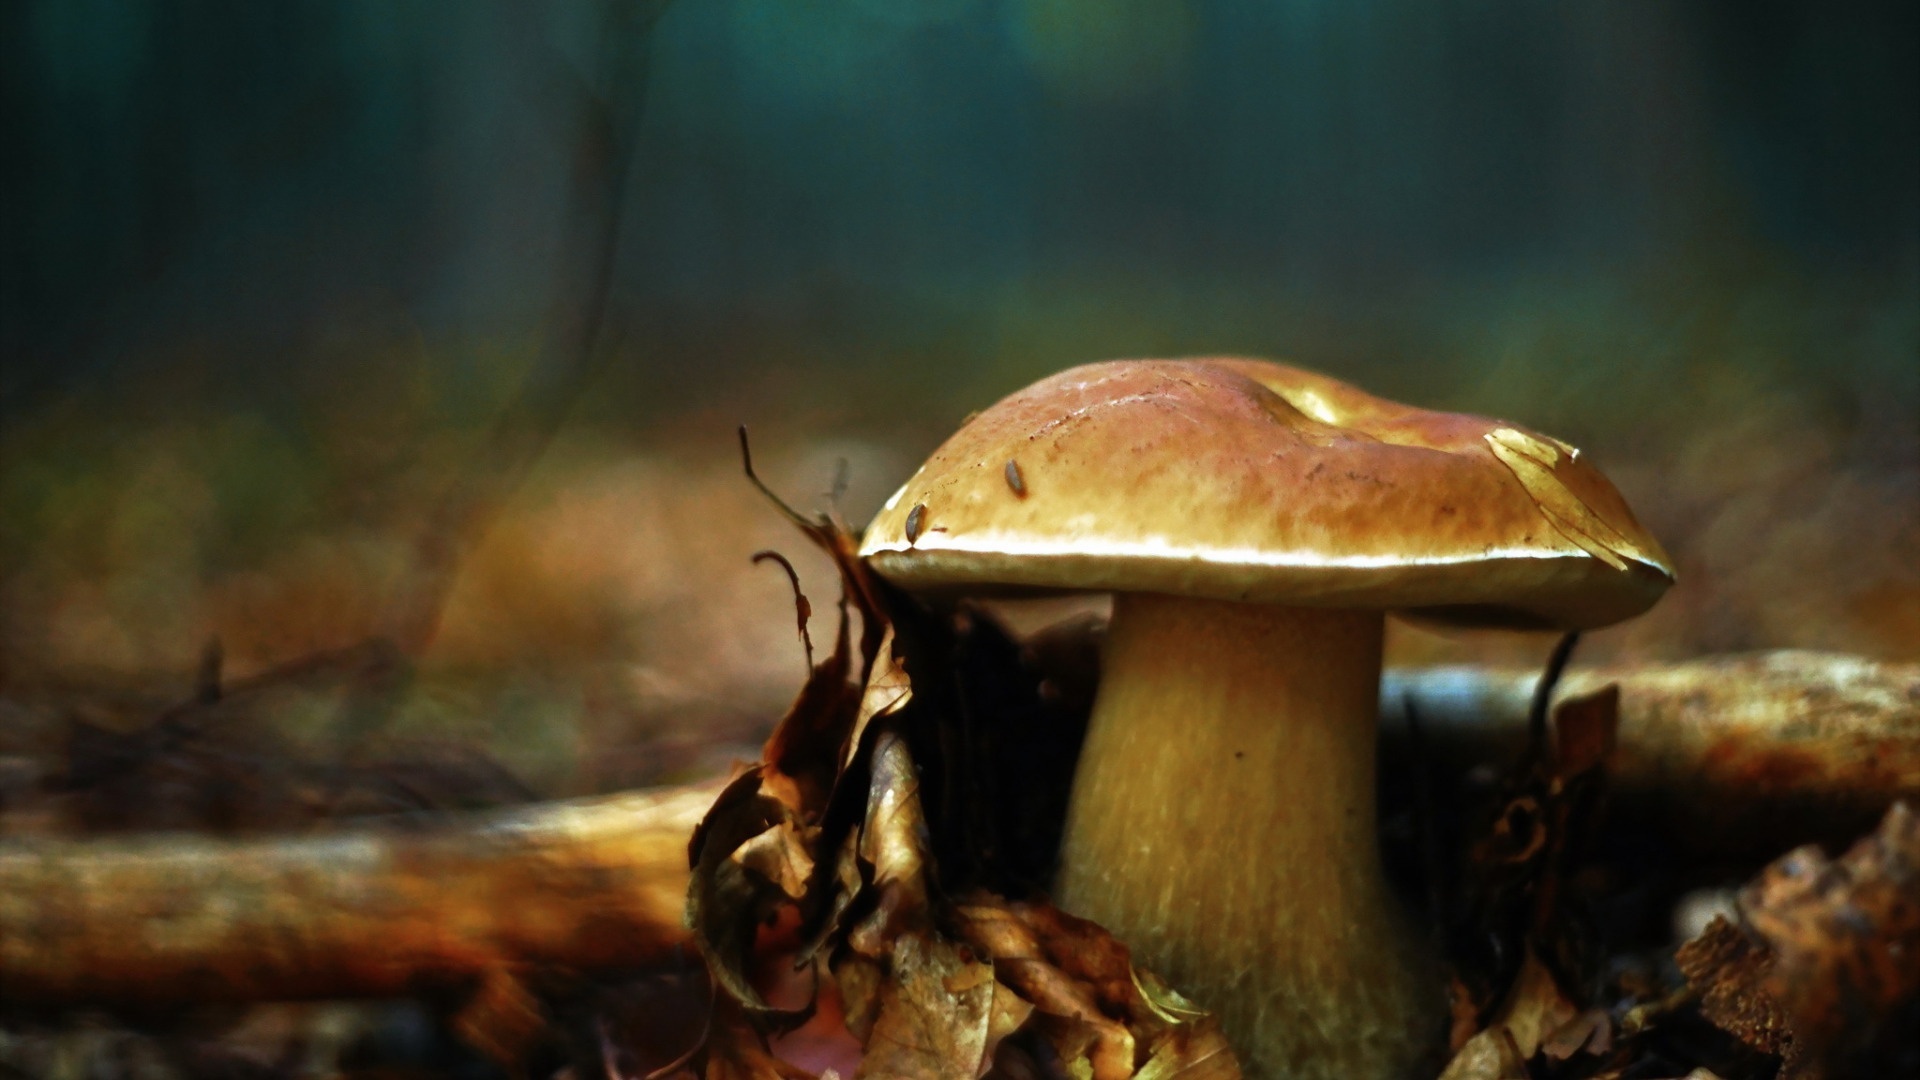 Macro mushrooms, Nature wallpapers, Close-up photography, Detailed images, 1920x1080 Full HD Desktop